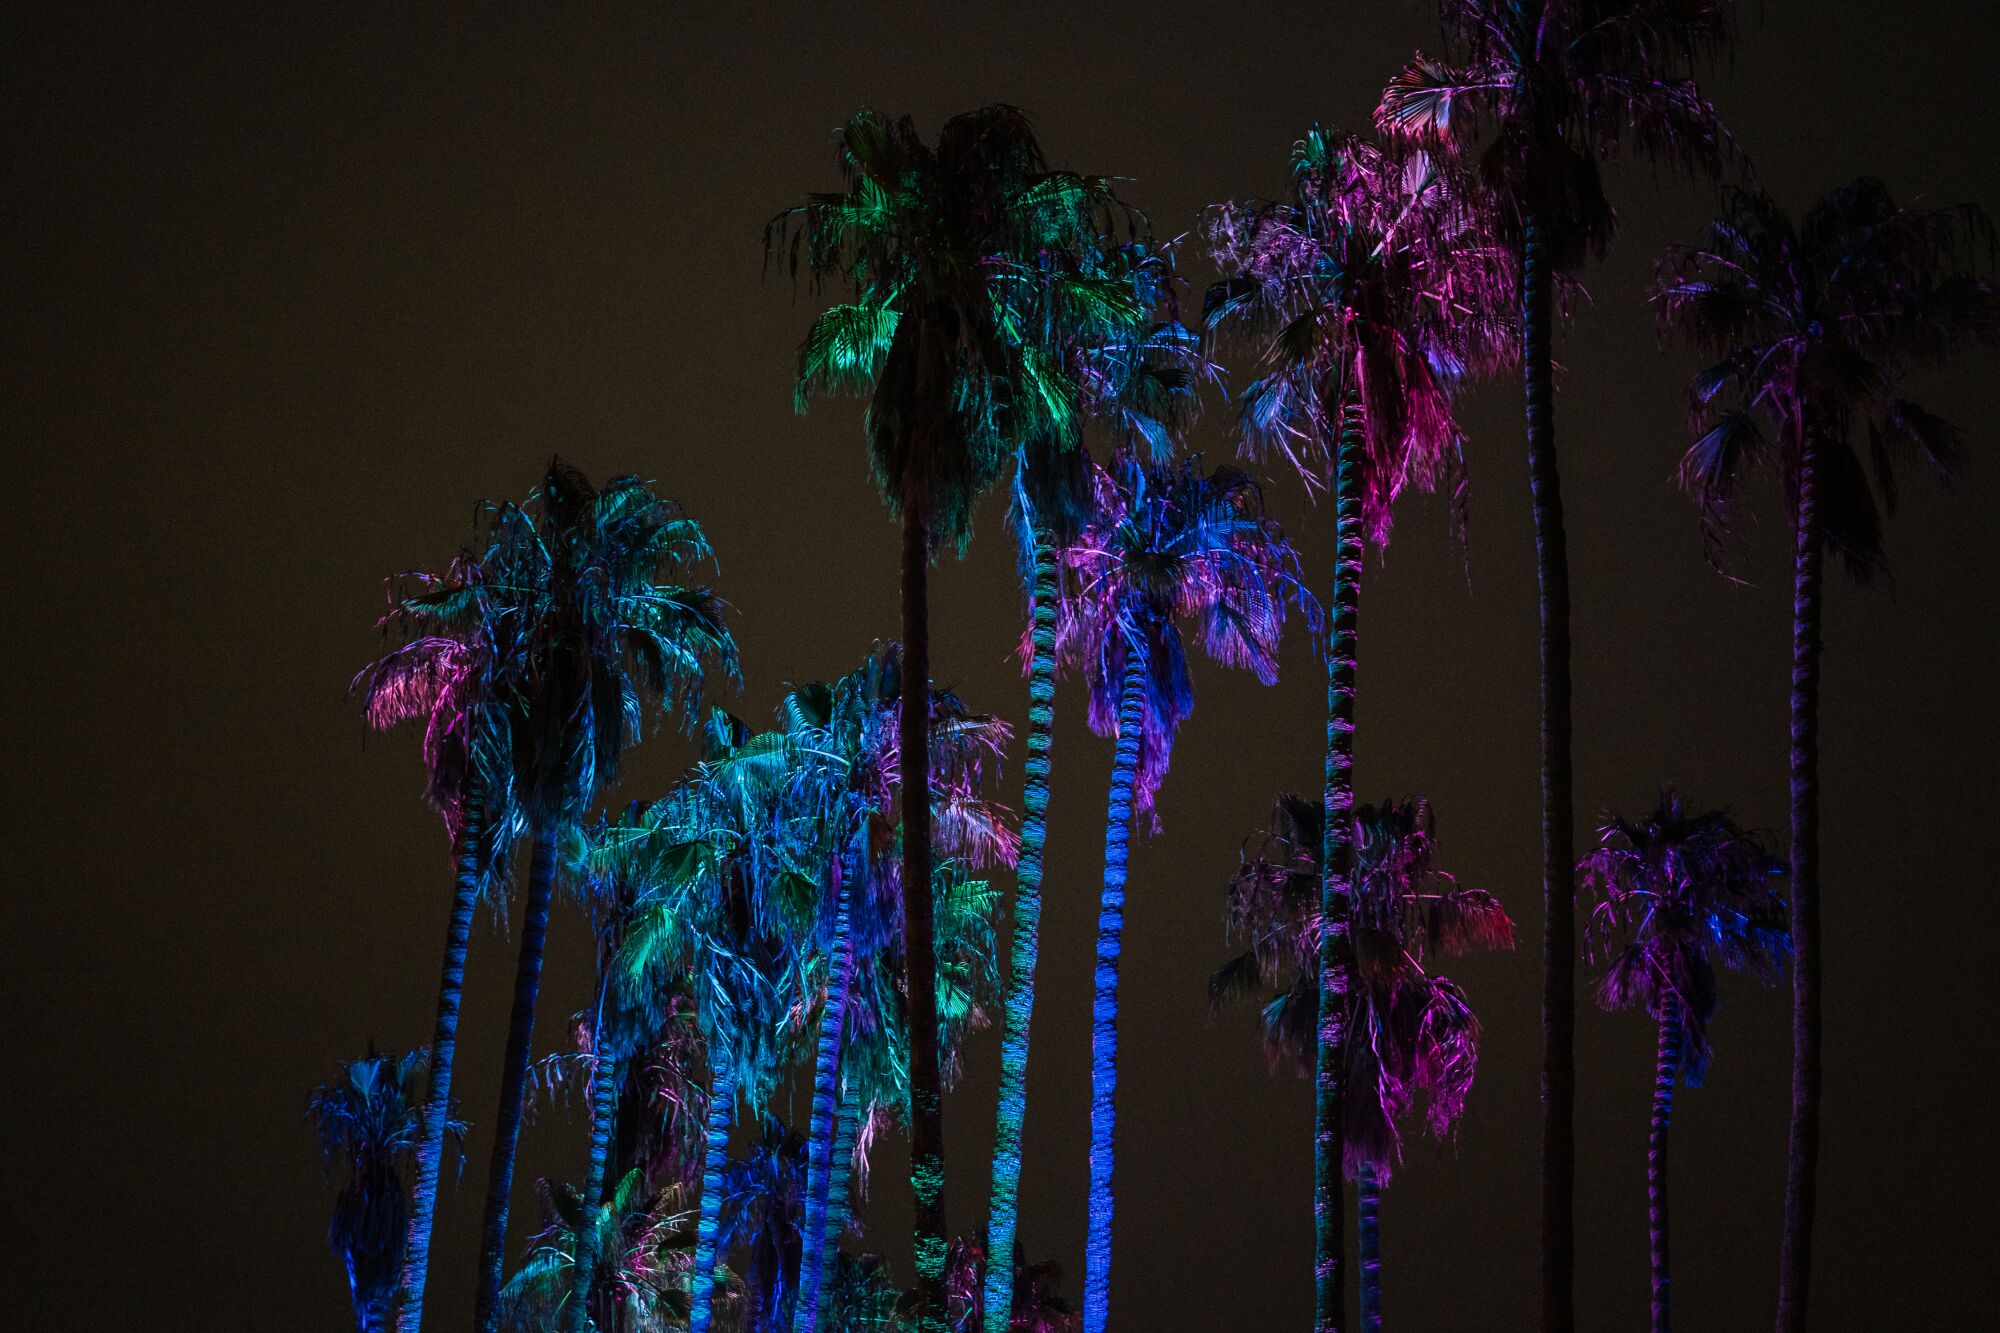 Trees lit up at night at the Ohana Festival on September 25, 2021 in Dana Point, California.